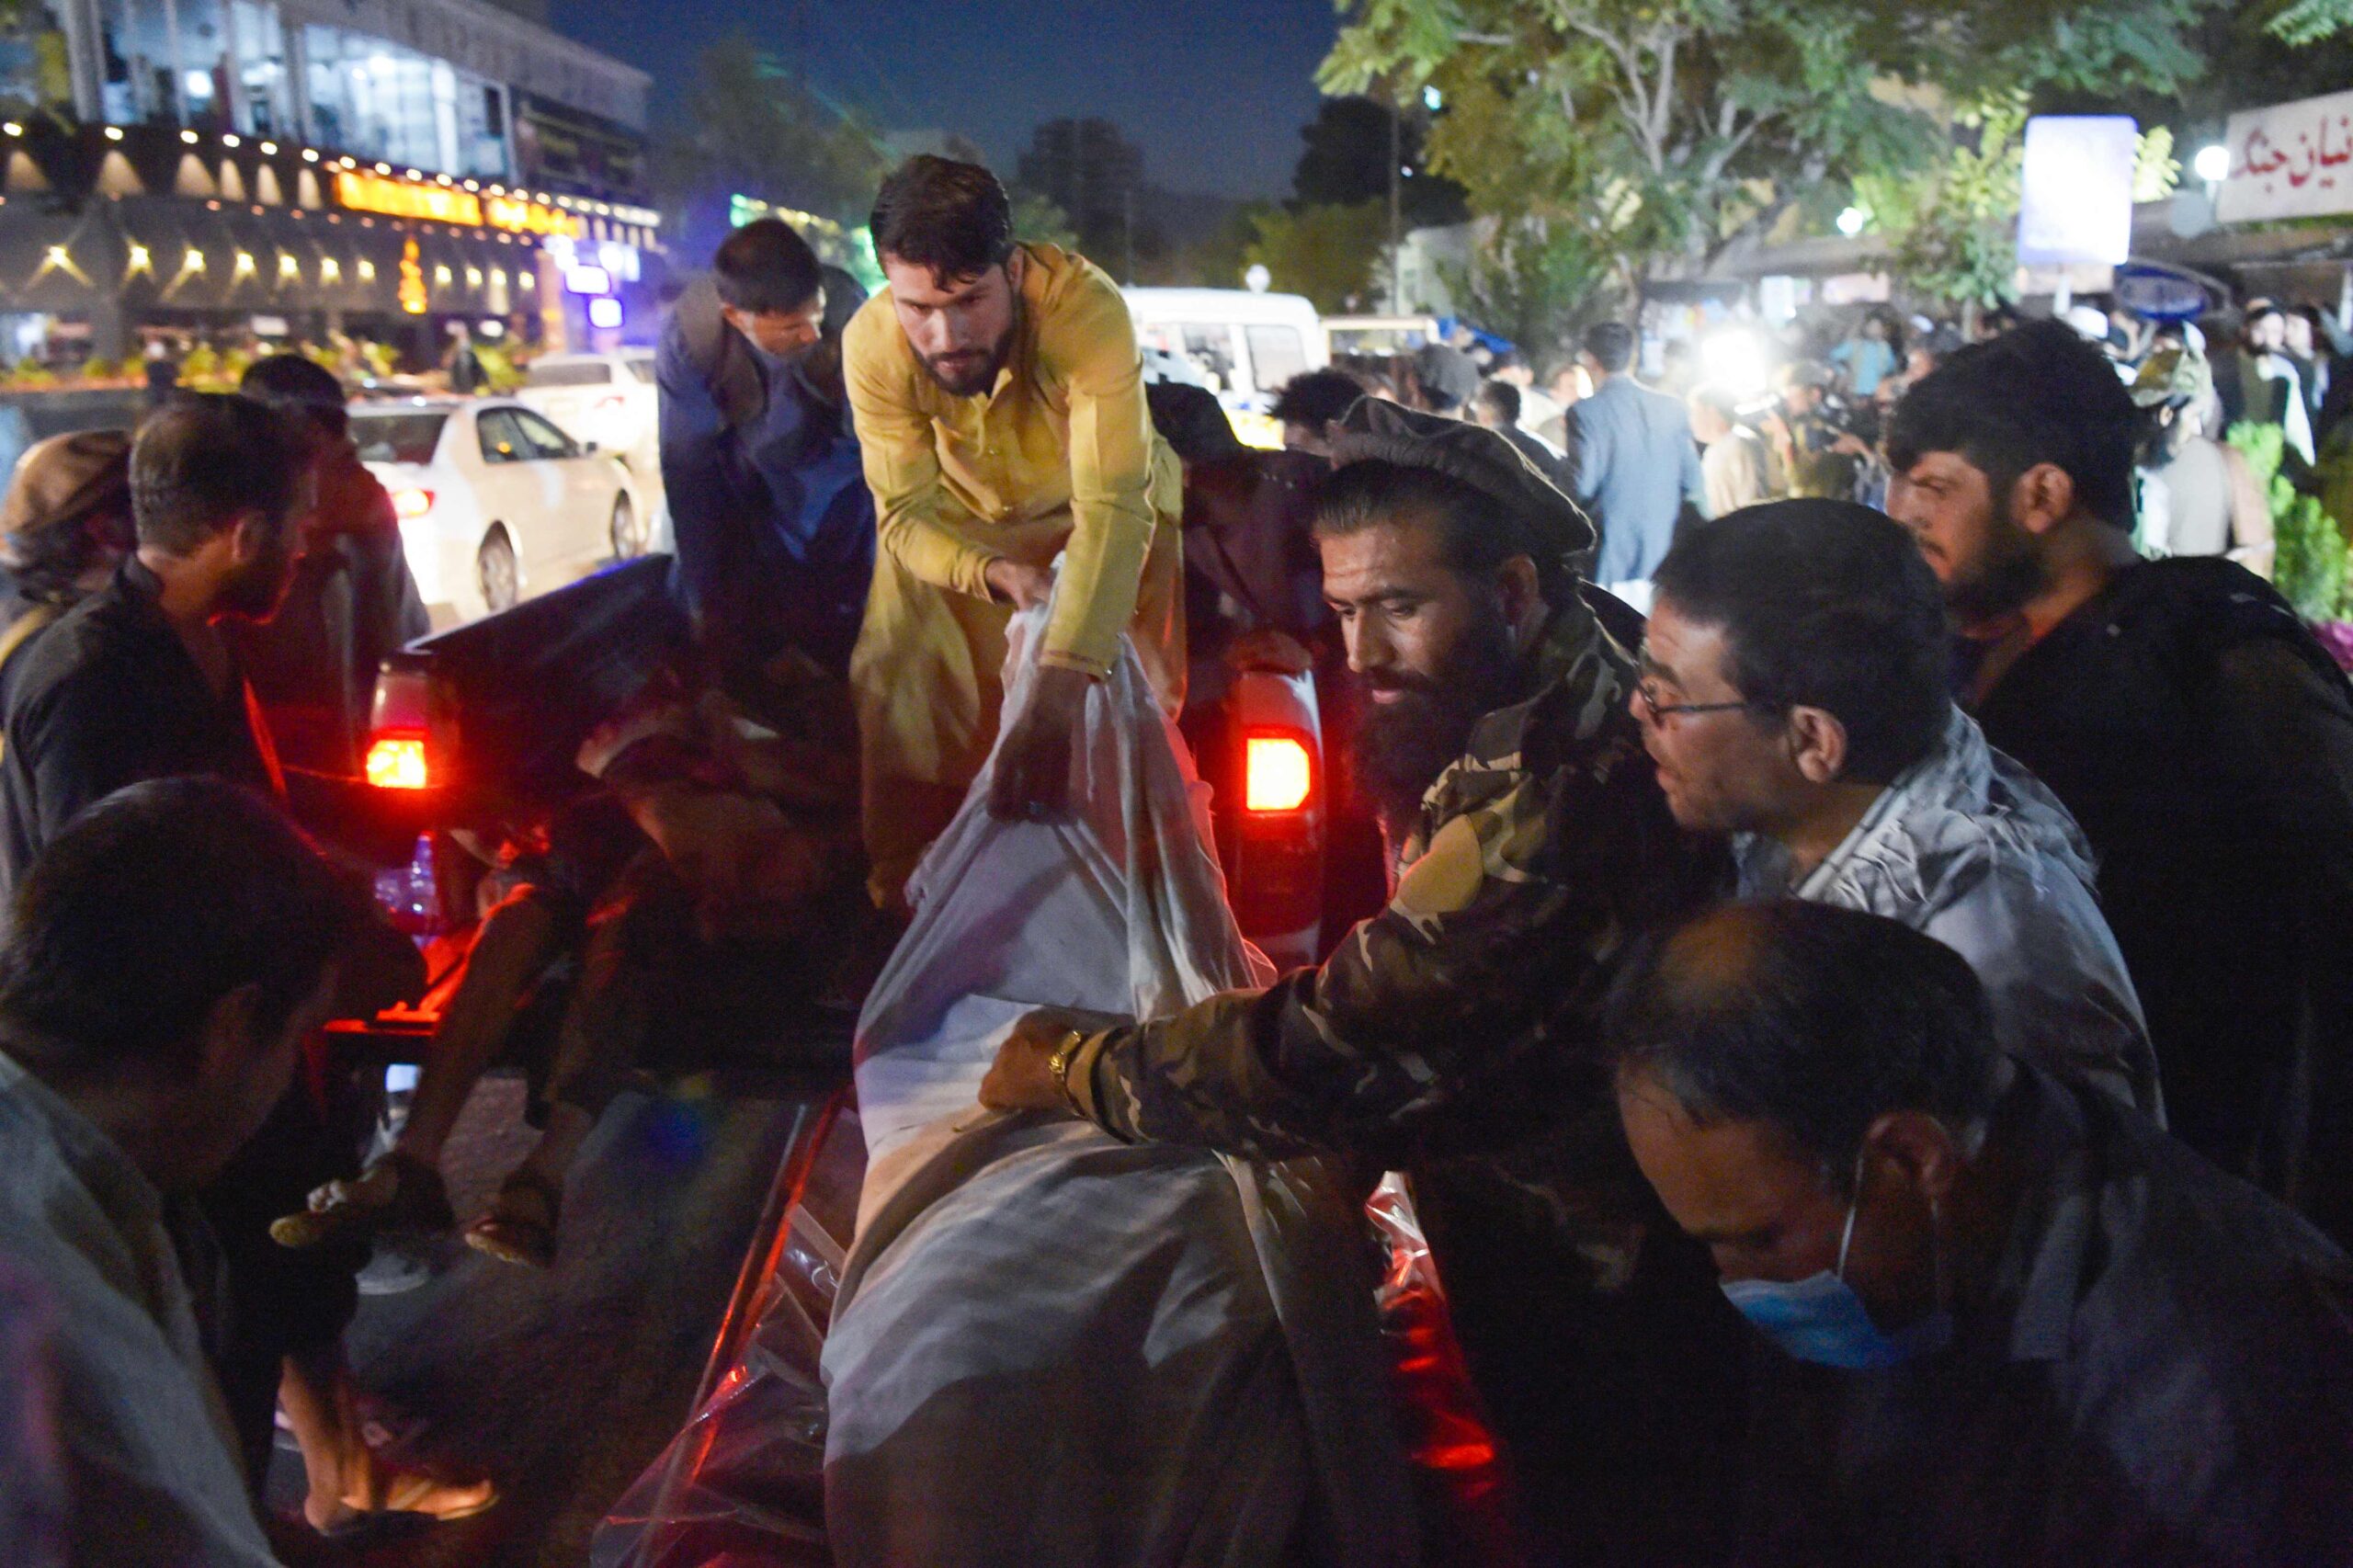 Госпитализация пострадавших при взрывах. Фото  Wakil KOHSAR / AFP/Scanpix/Leta